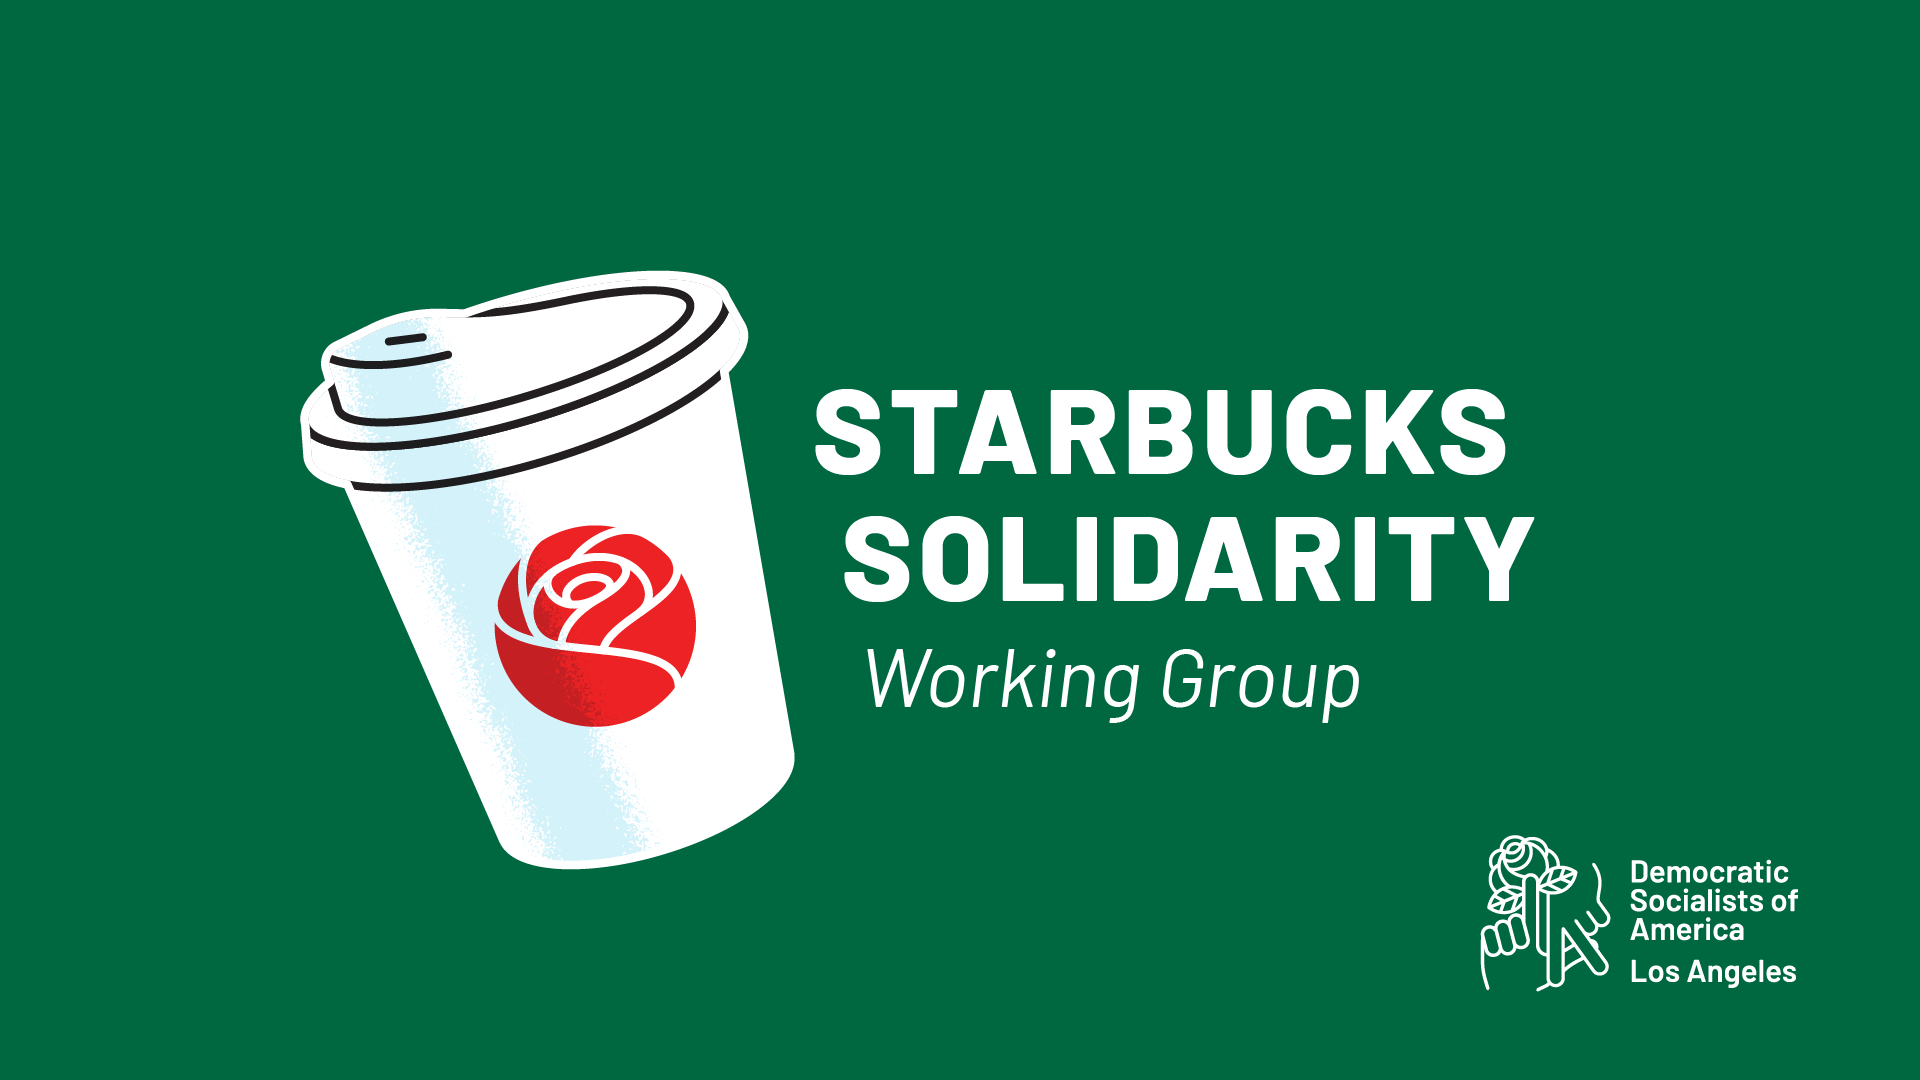 Starbucks Solidarity working group image